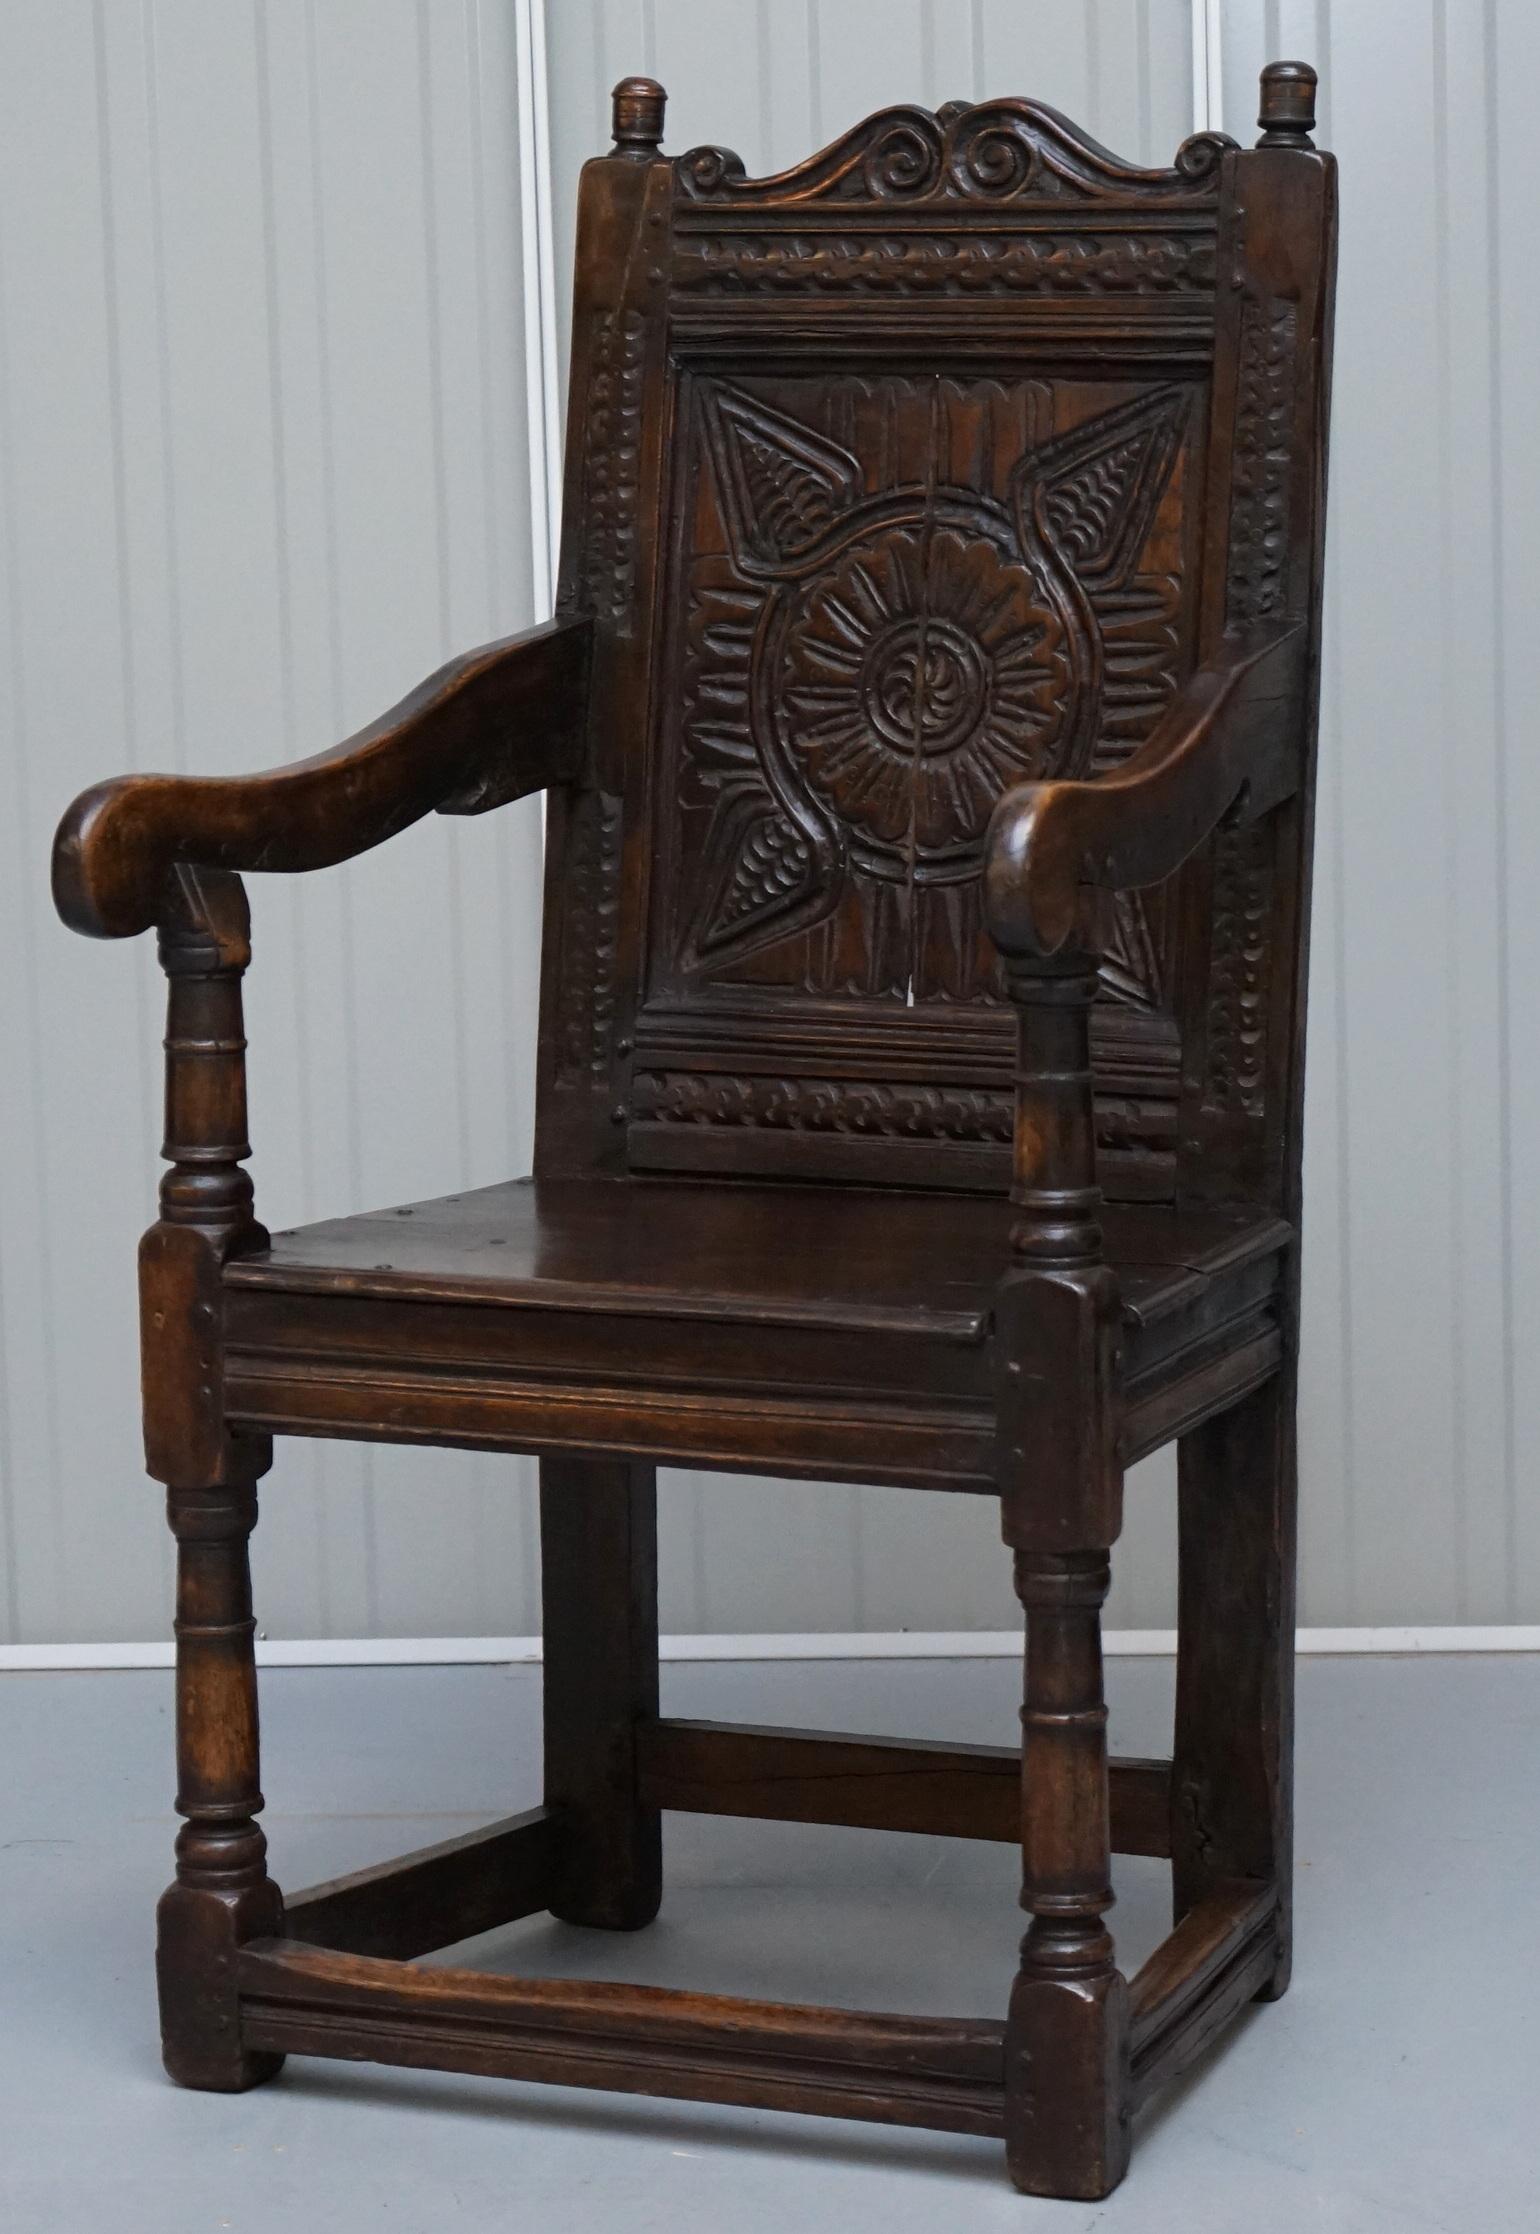 17th century chair